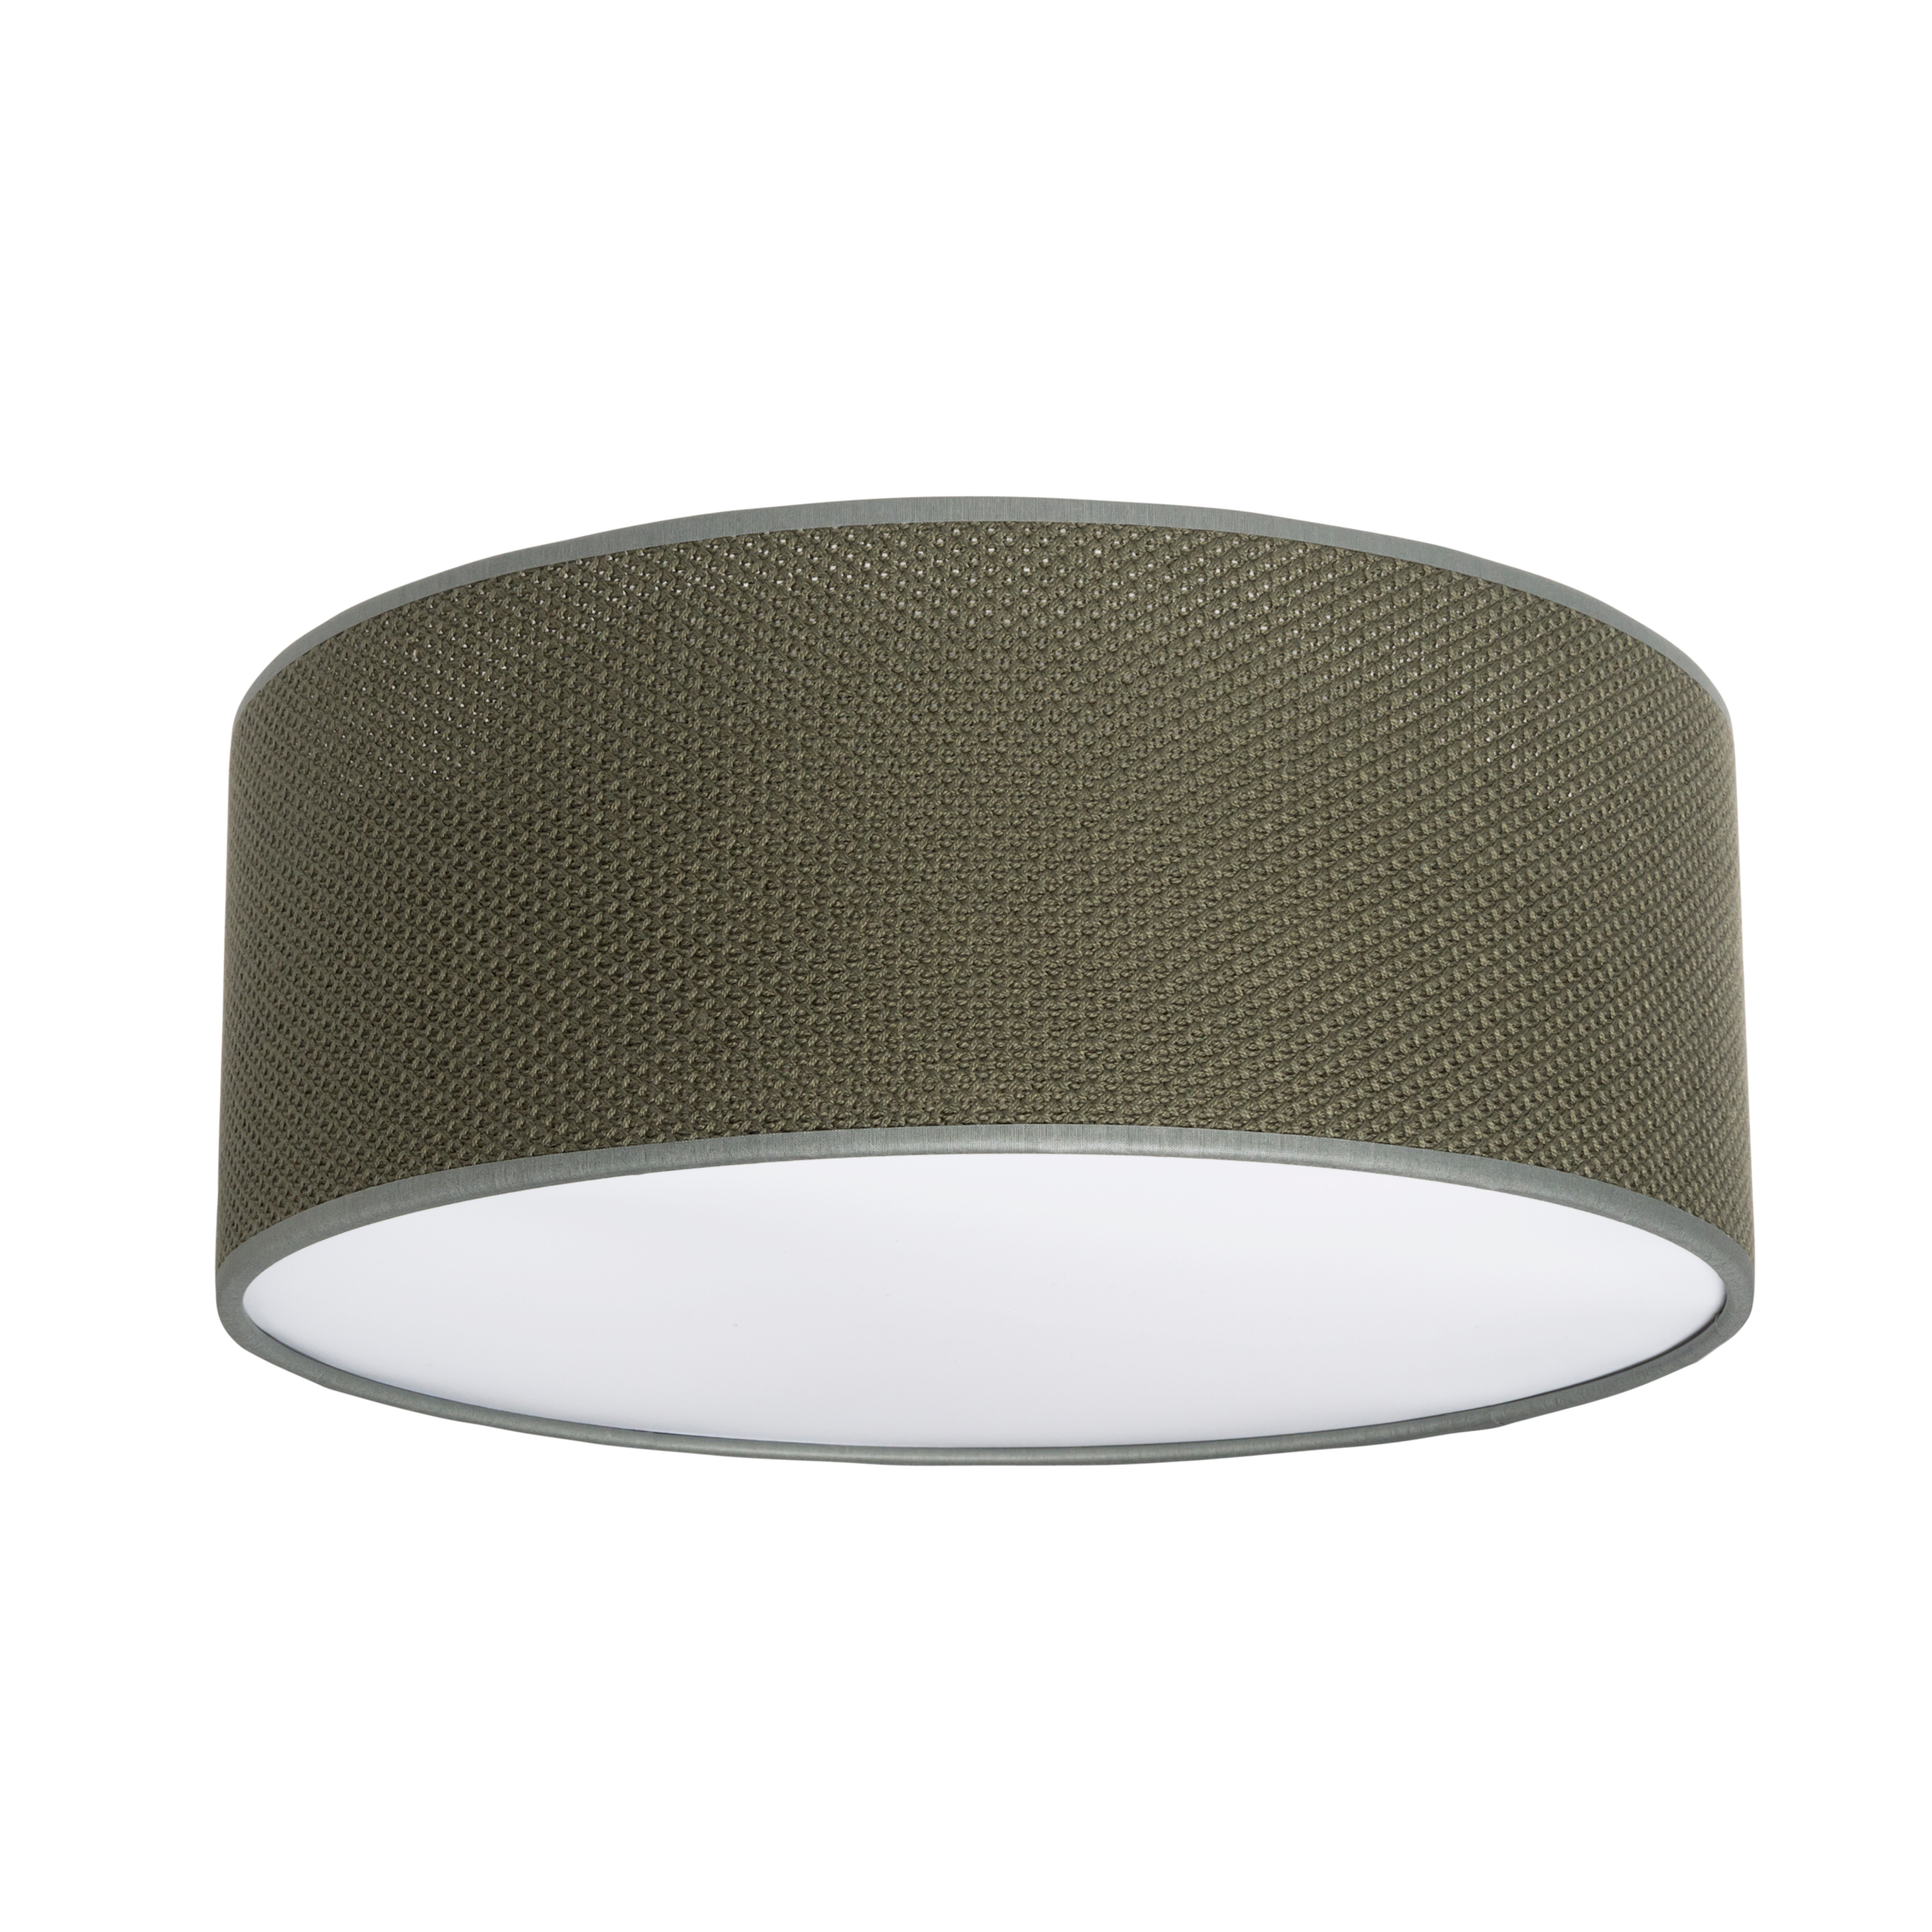 Ceiling lamp Classic khaki - Ø35 cm